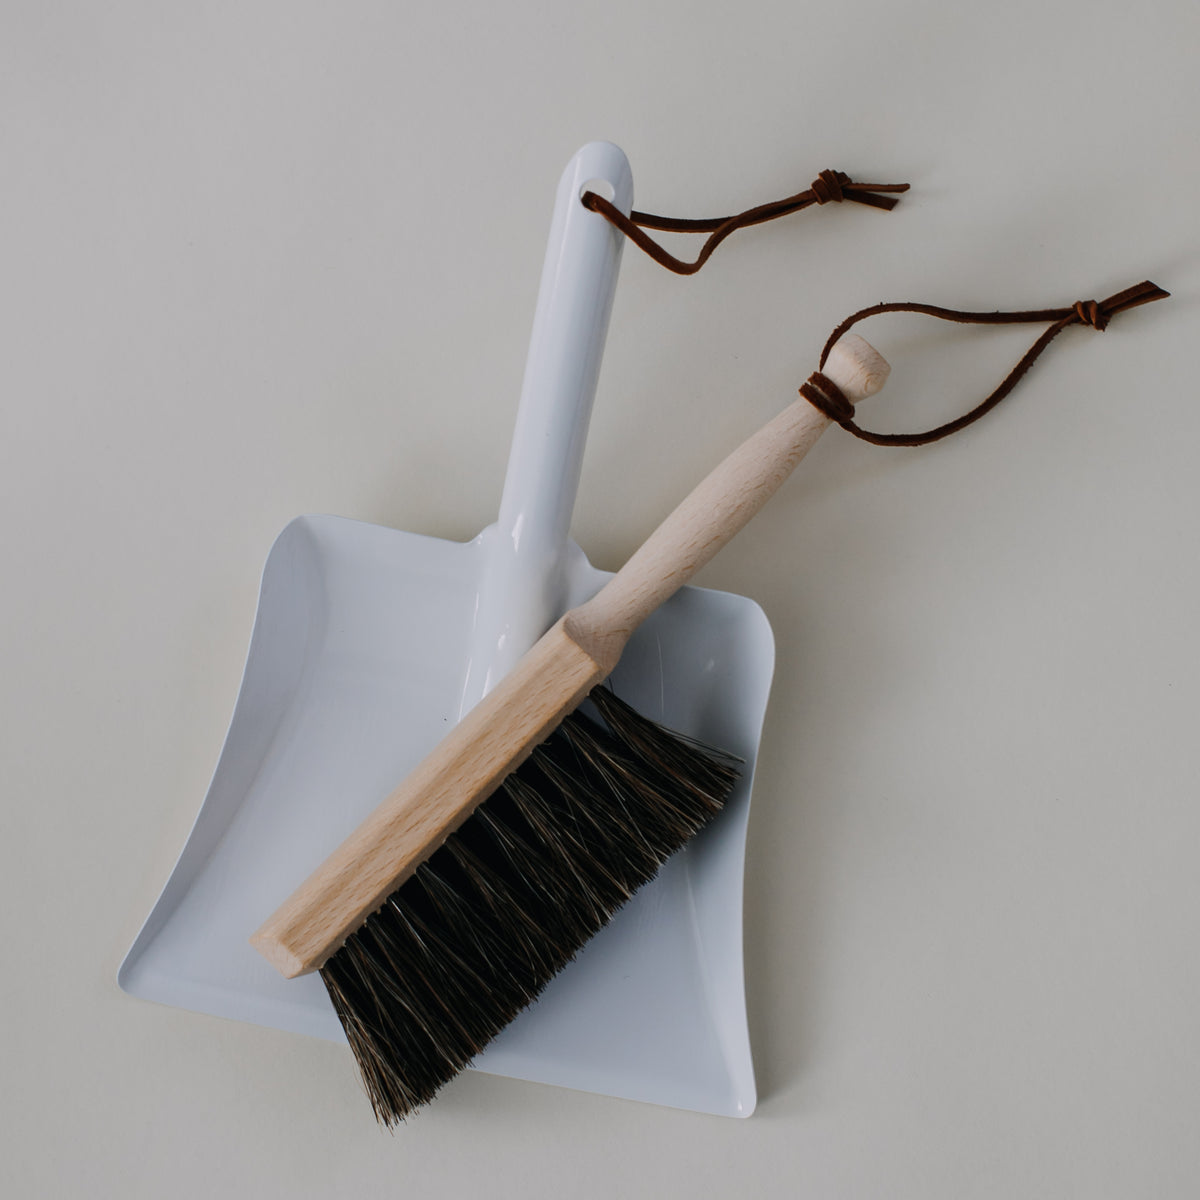 child's brush and dustpan